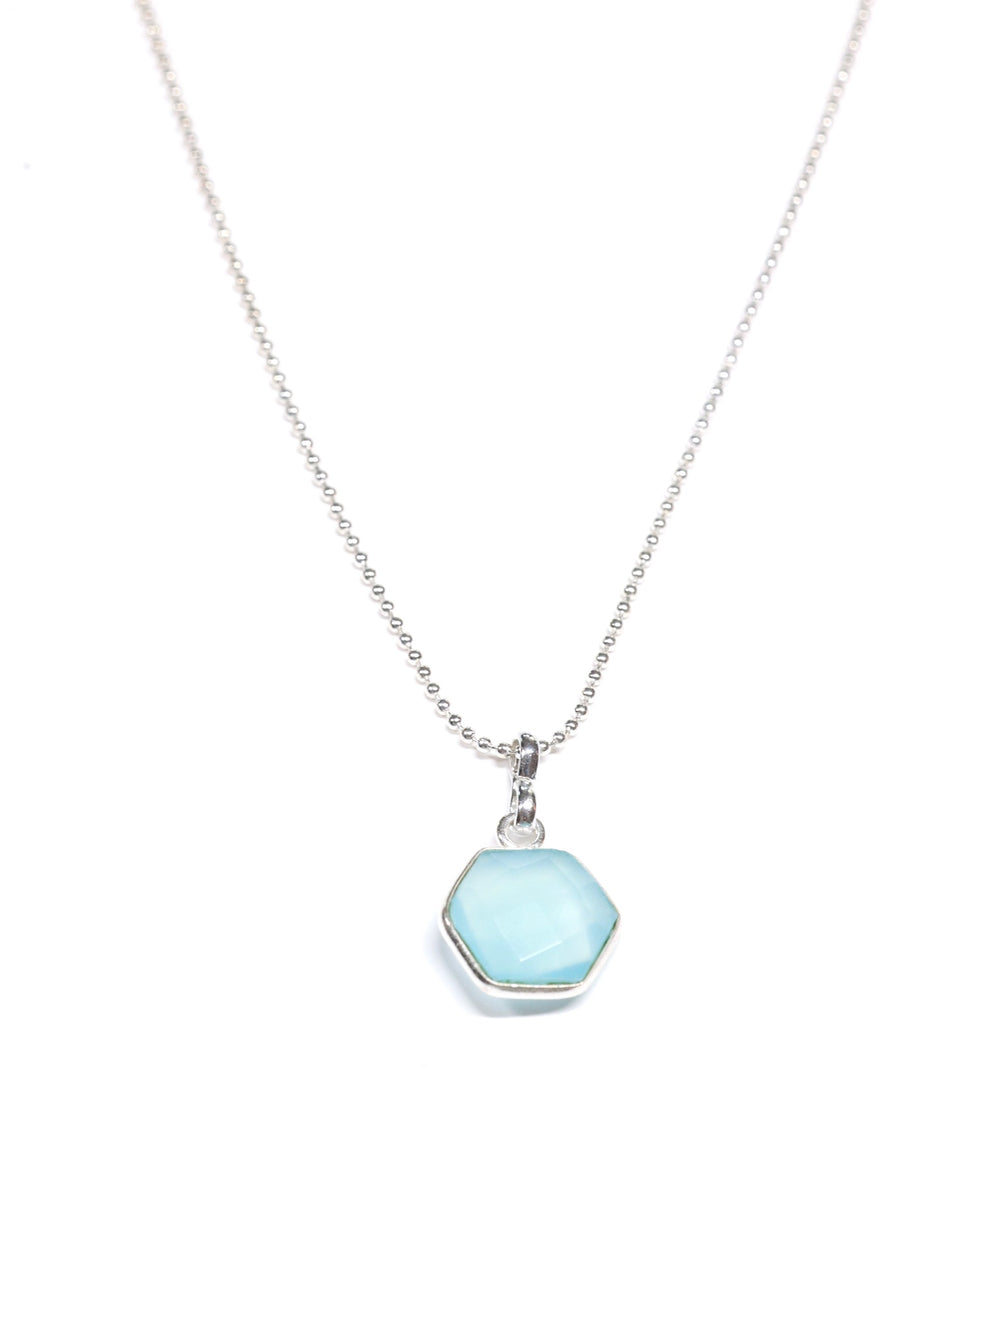 Aqua chalcedony hexagon pendant necklace -silver